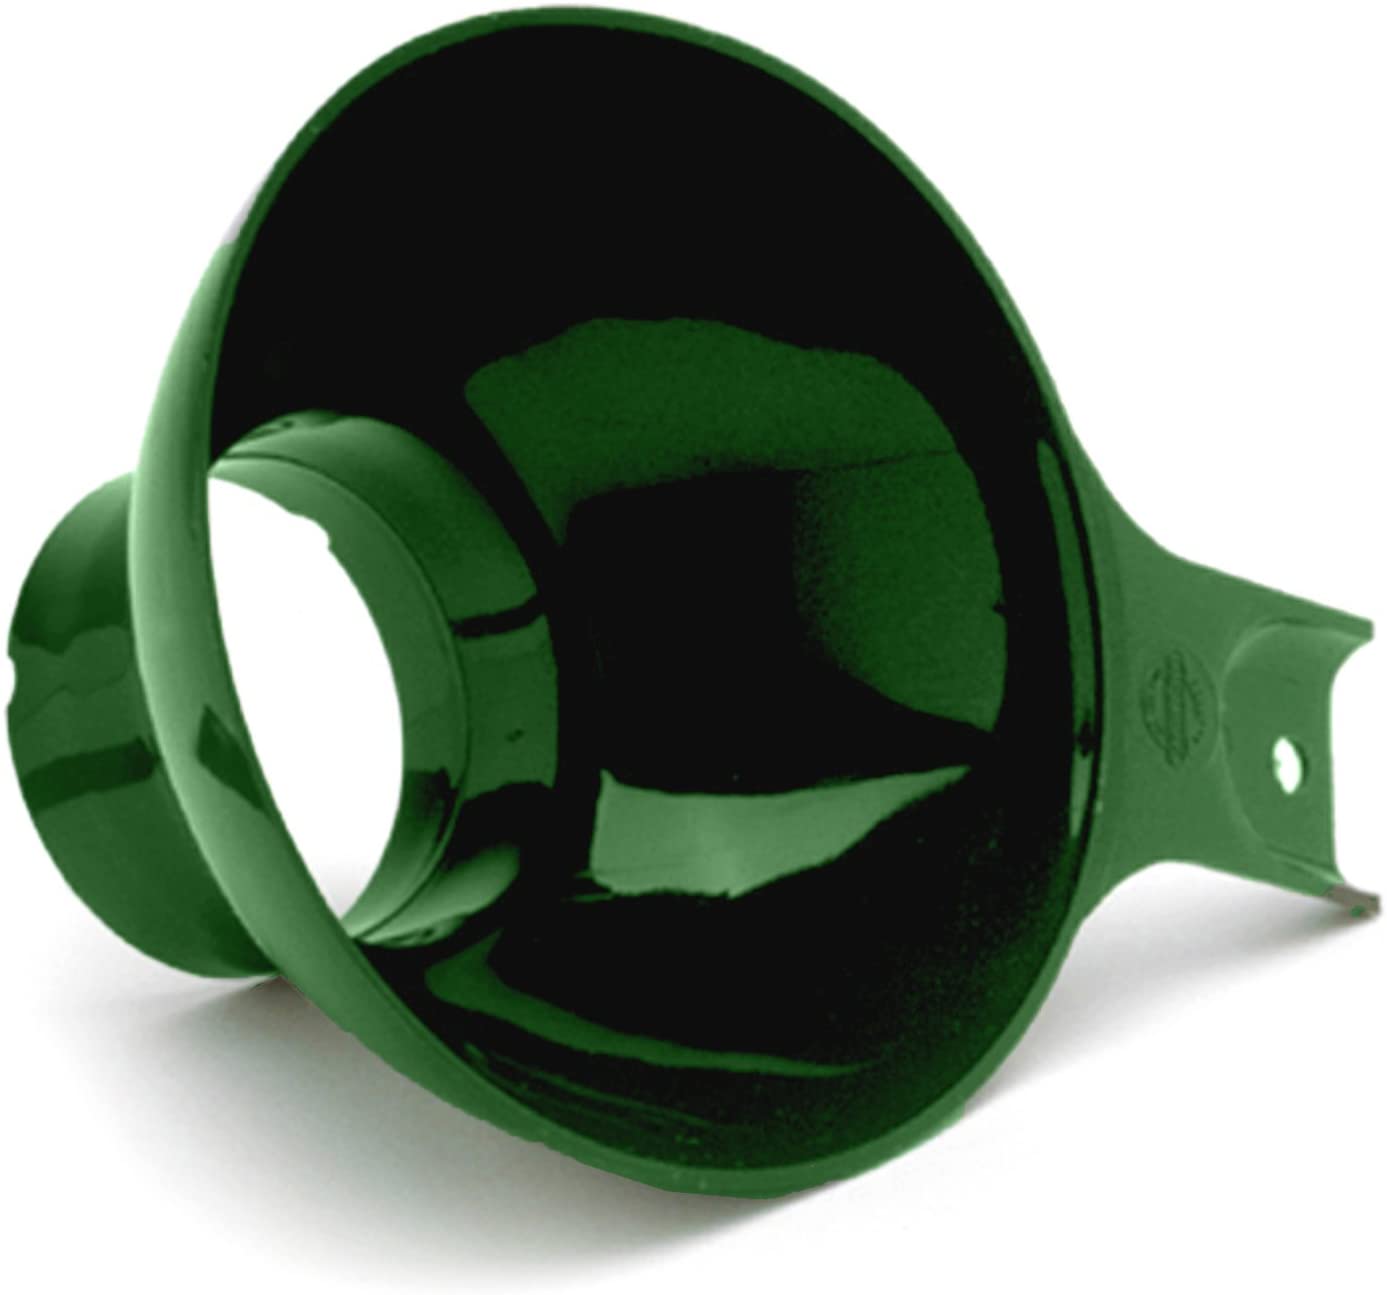 Norpro Canning 넓은 입 플라스틱 깔때기, 녹색, 4.75in / 12cm